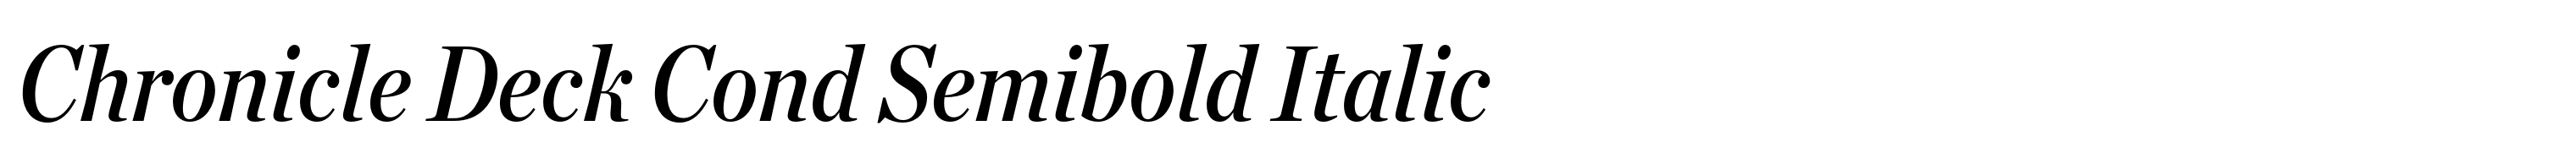 Chronicle Deck Cond Semibold Italic